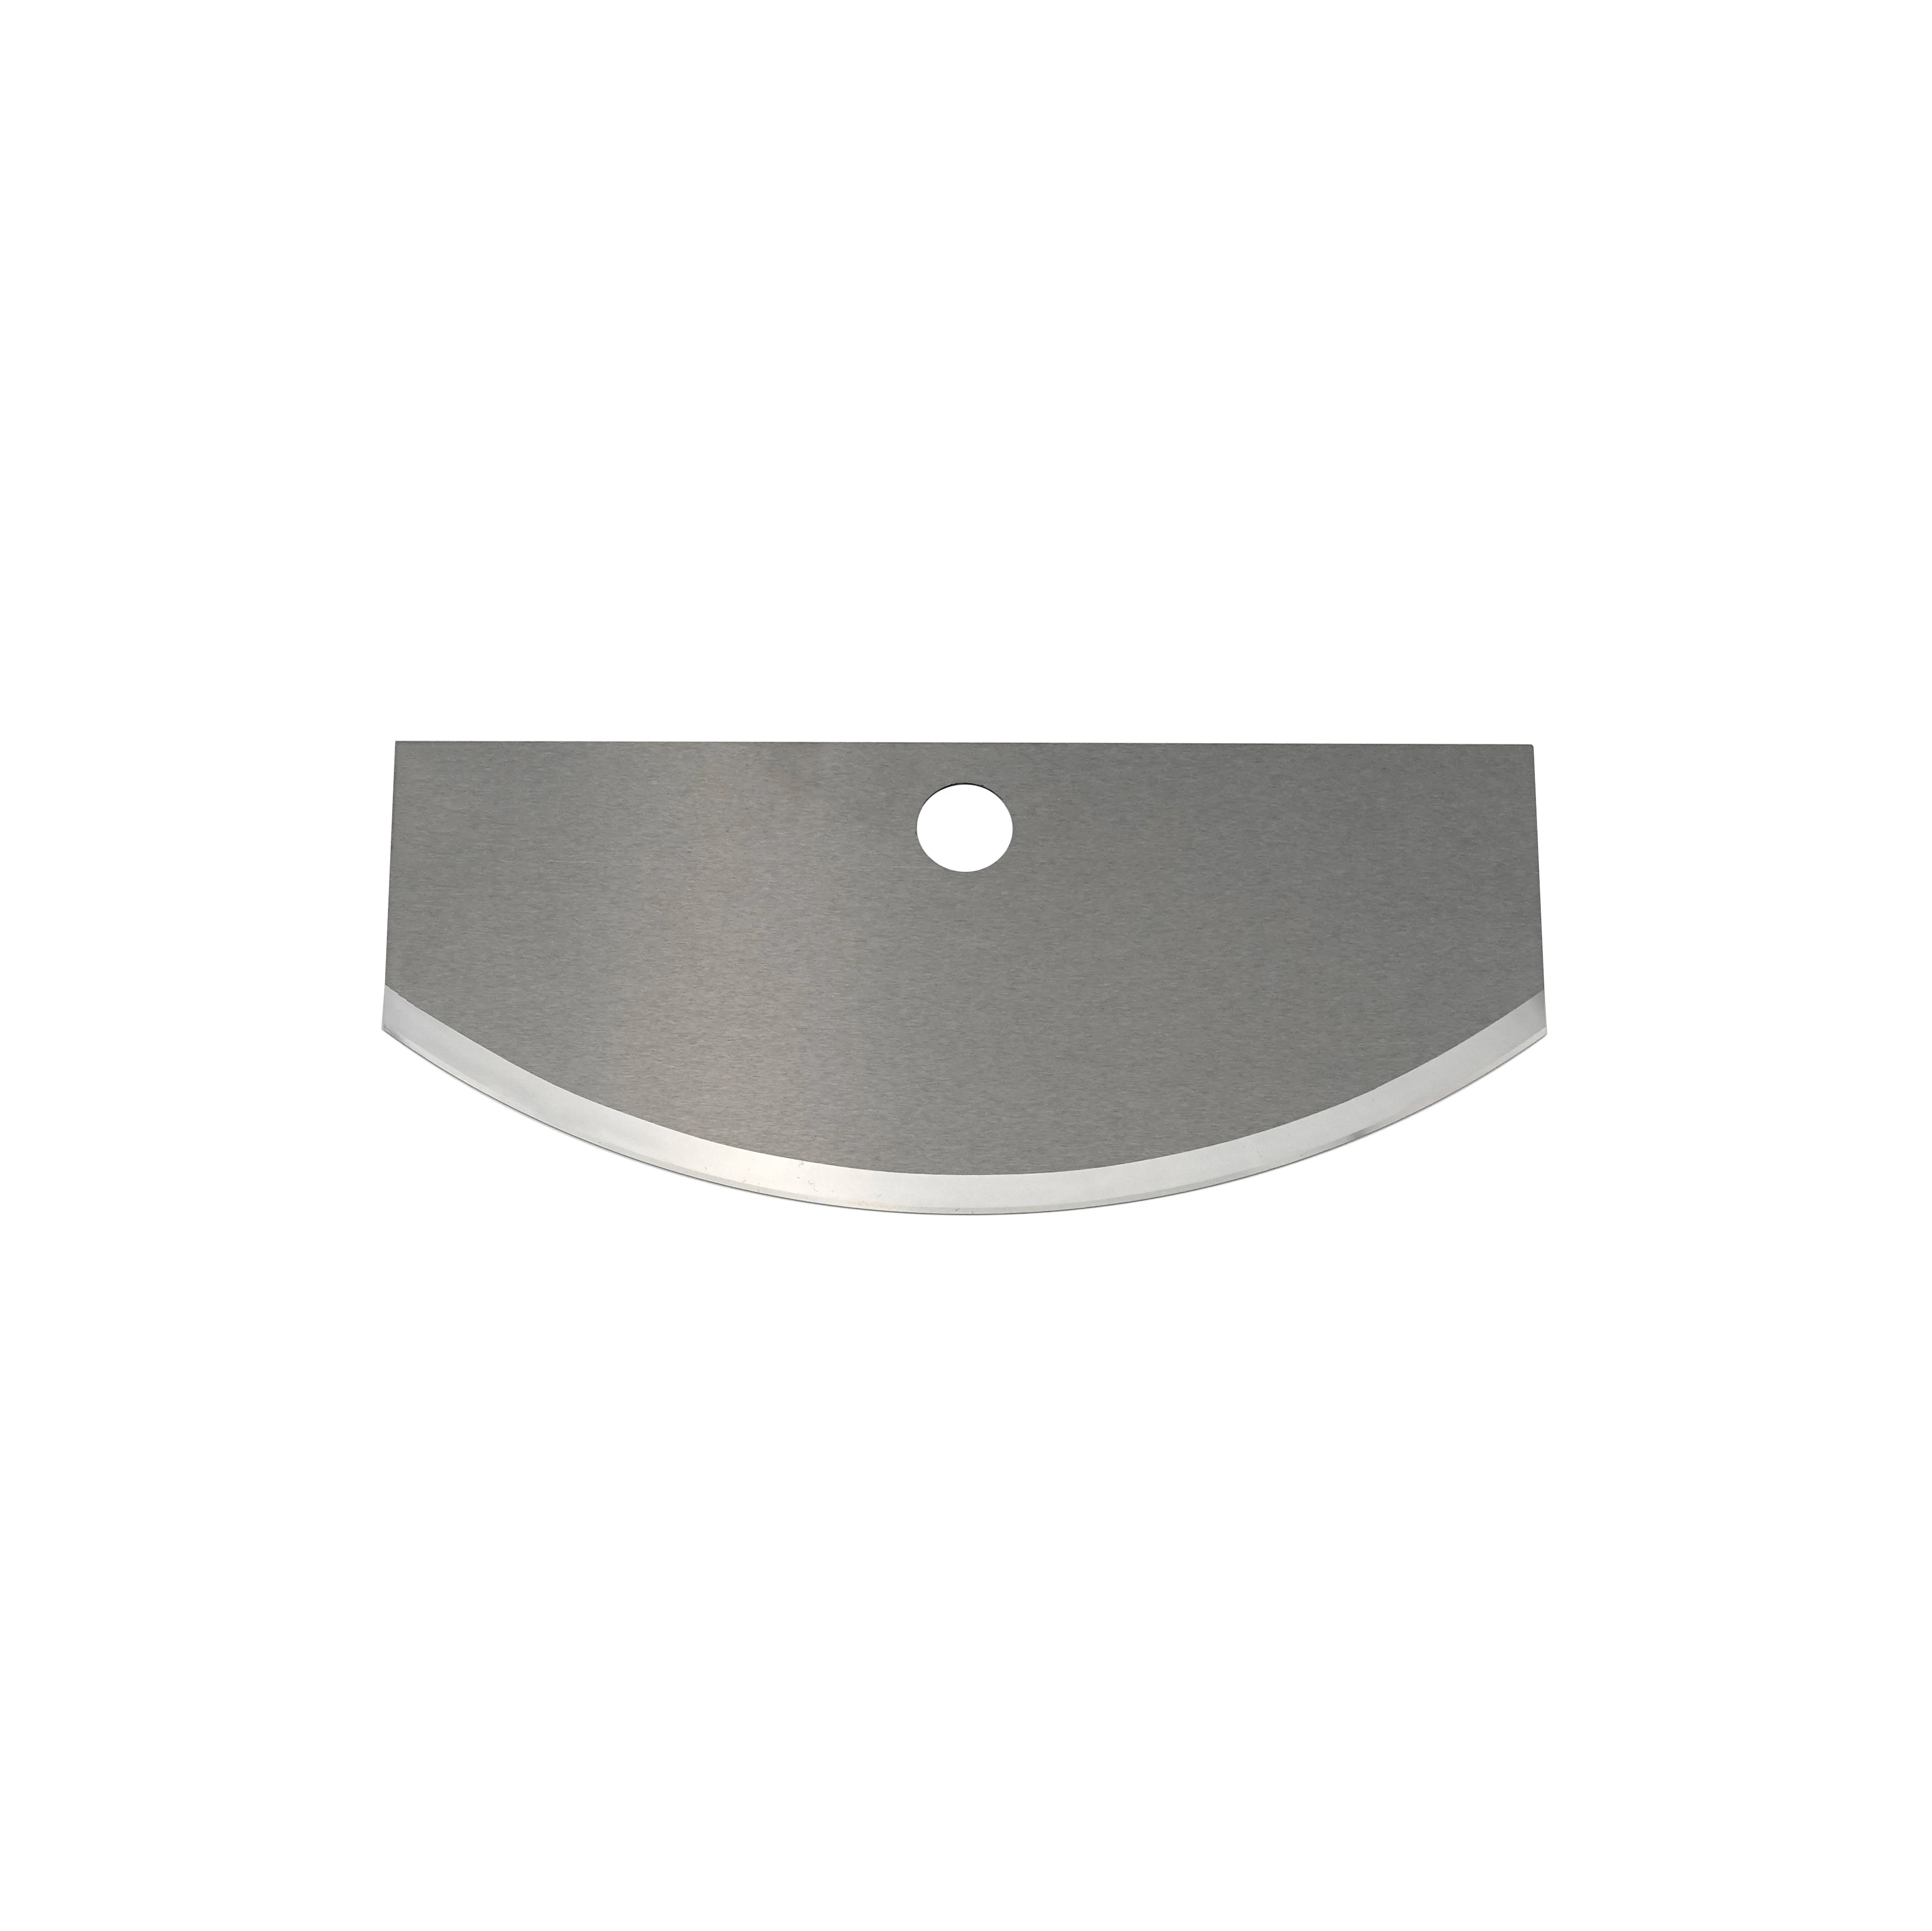 2020 hot selling tungsten carbide arc edge cutting blade iron carbide edge utility blades